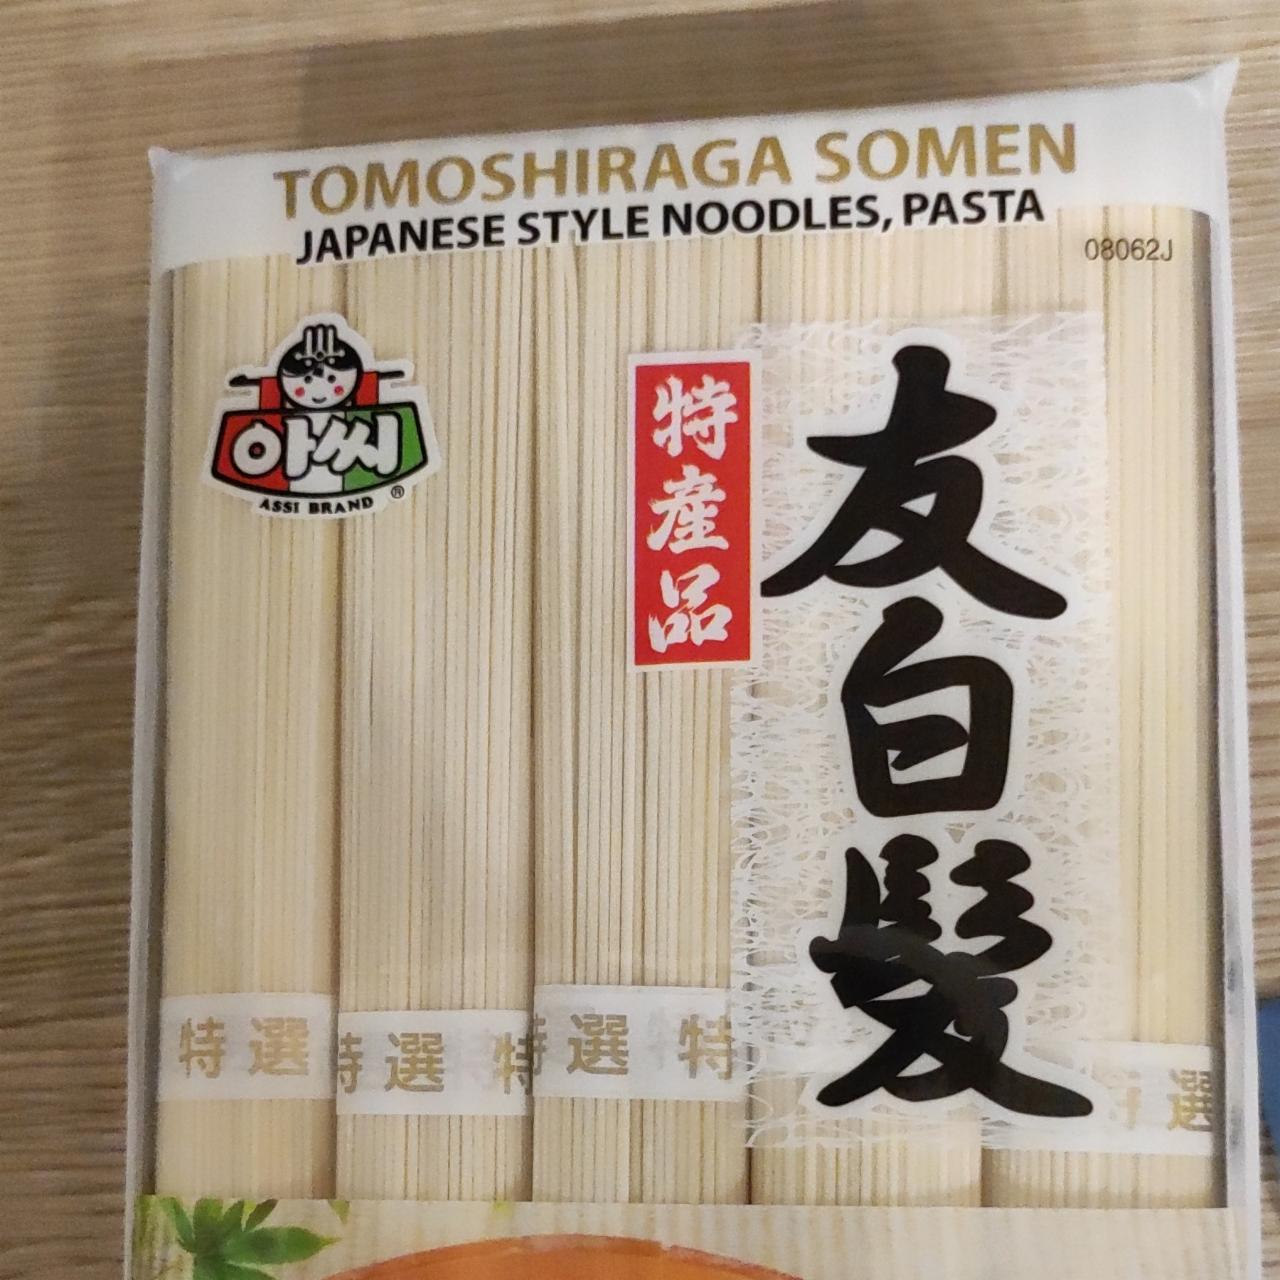 Fotografie - Tomoshiraga Somen Japanese Style Noodles Assi Brand